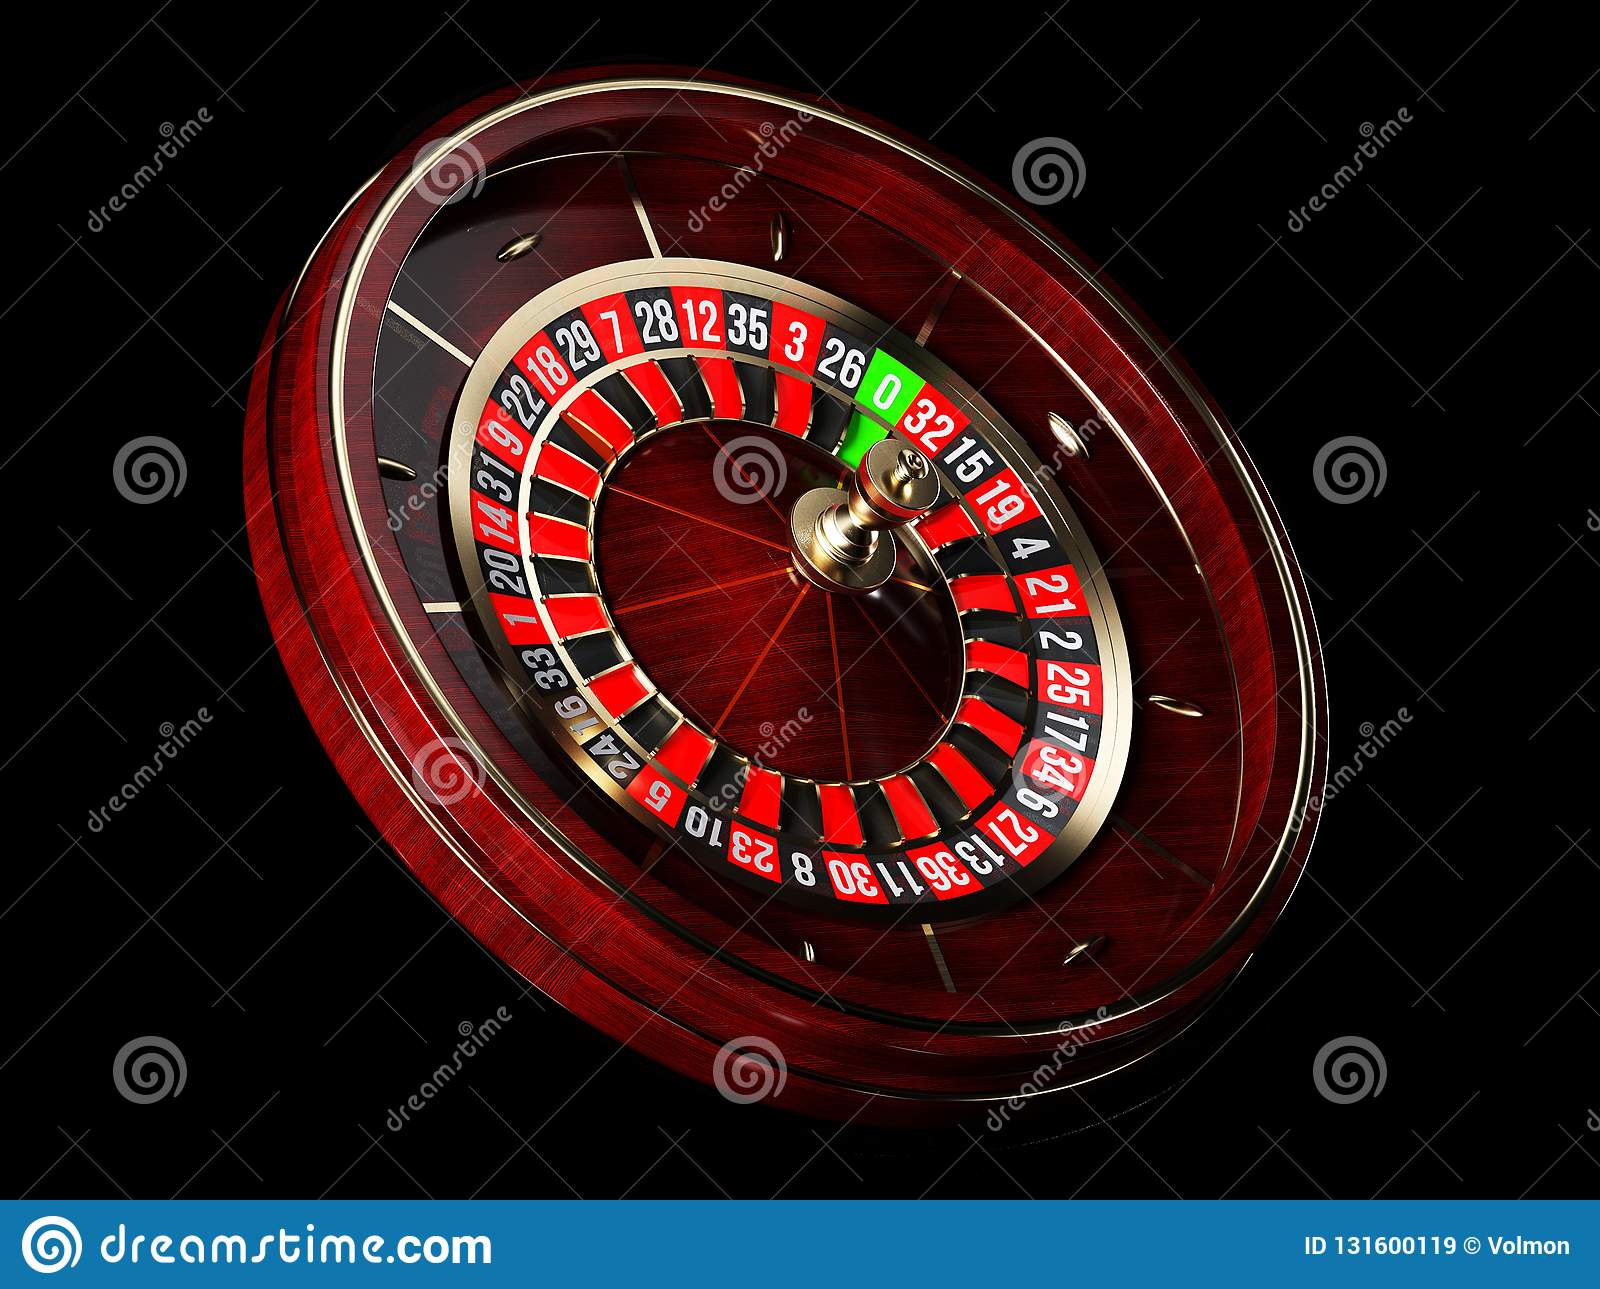 Novo bg online casino